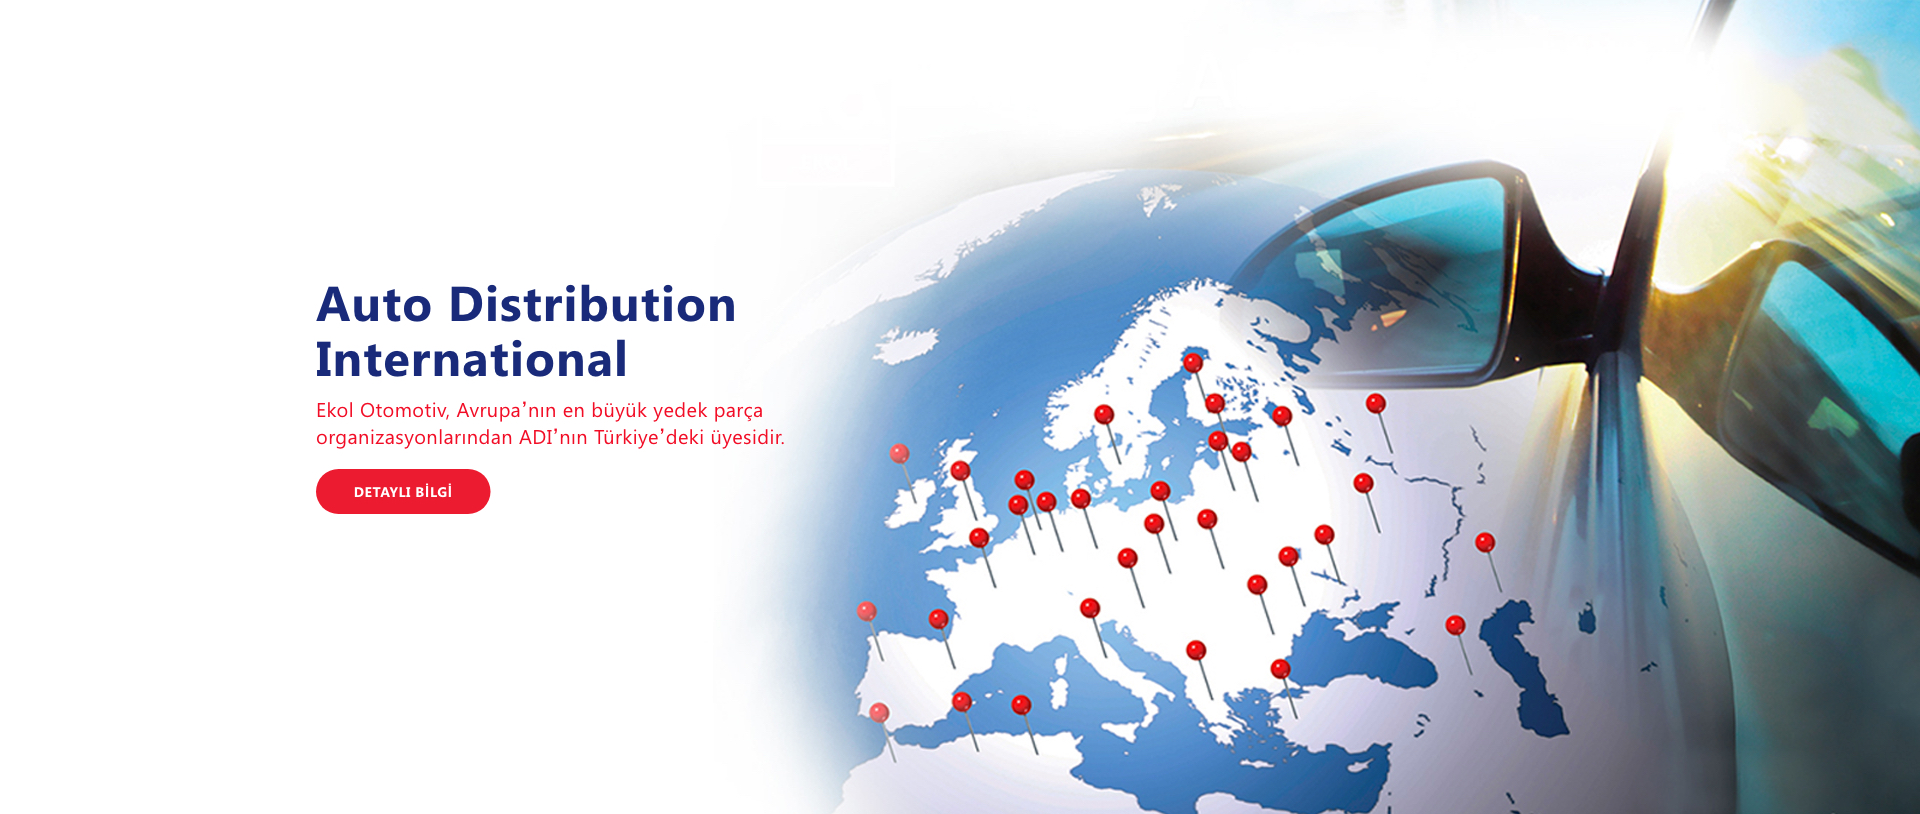 Auto Distribution International